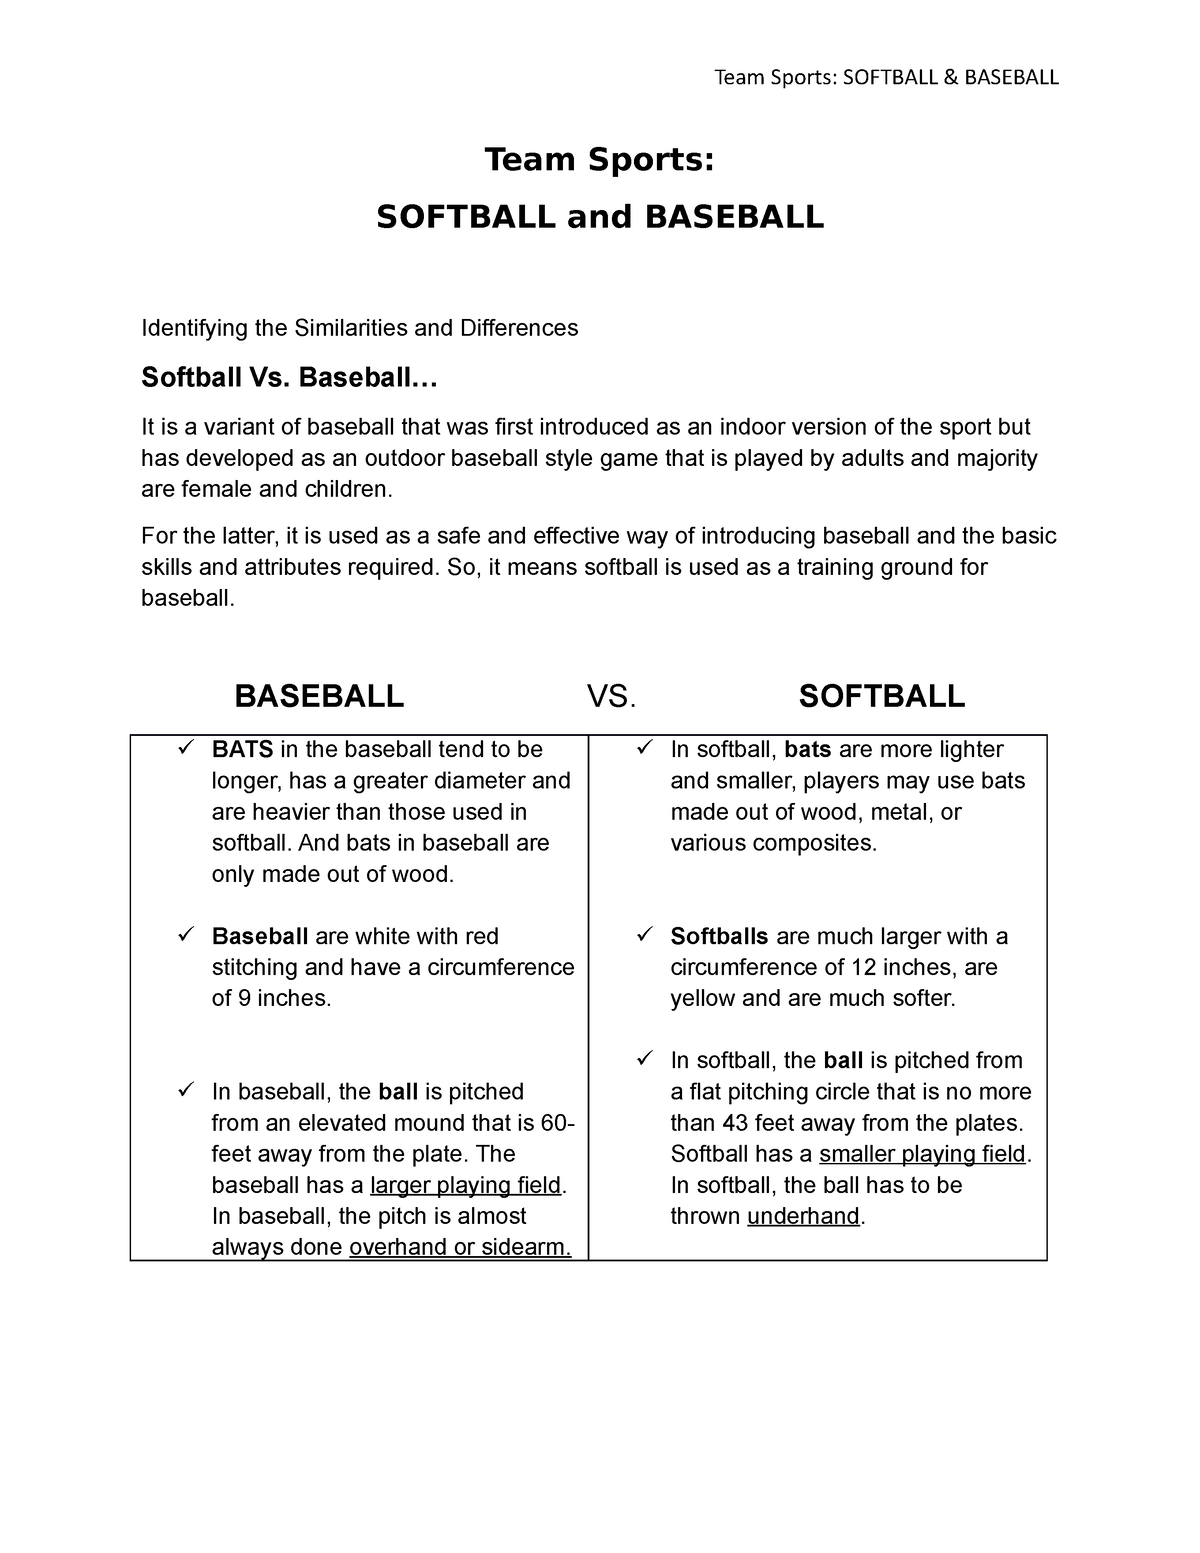 Team Sports Softball & Baseball - Team Sports: SOFTBALL & BASEBALL Team ...